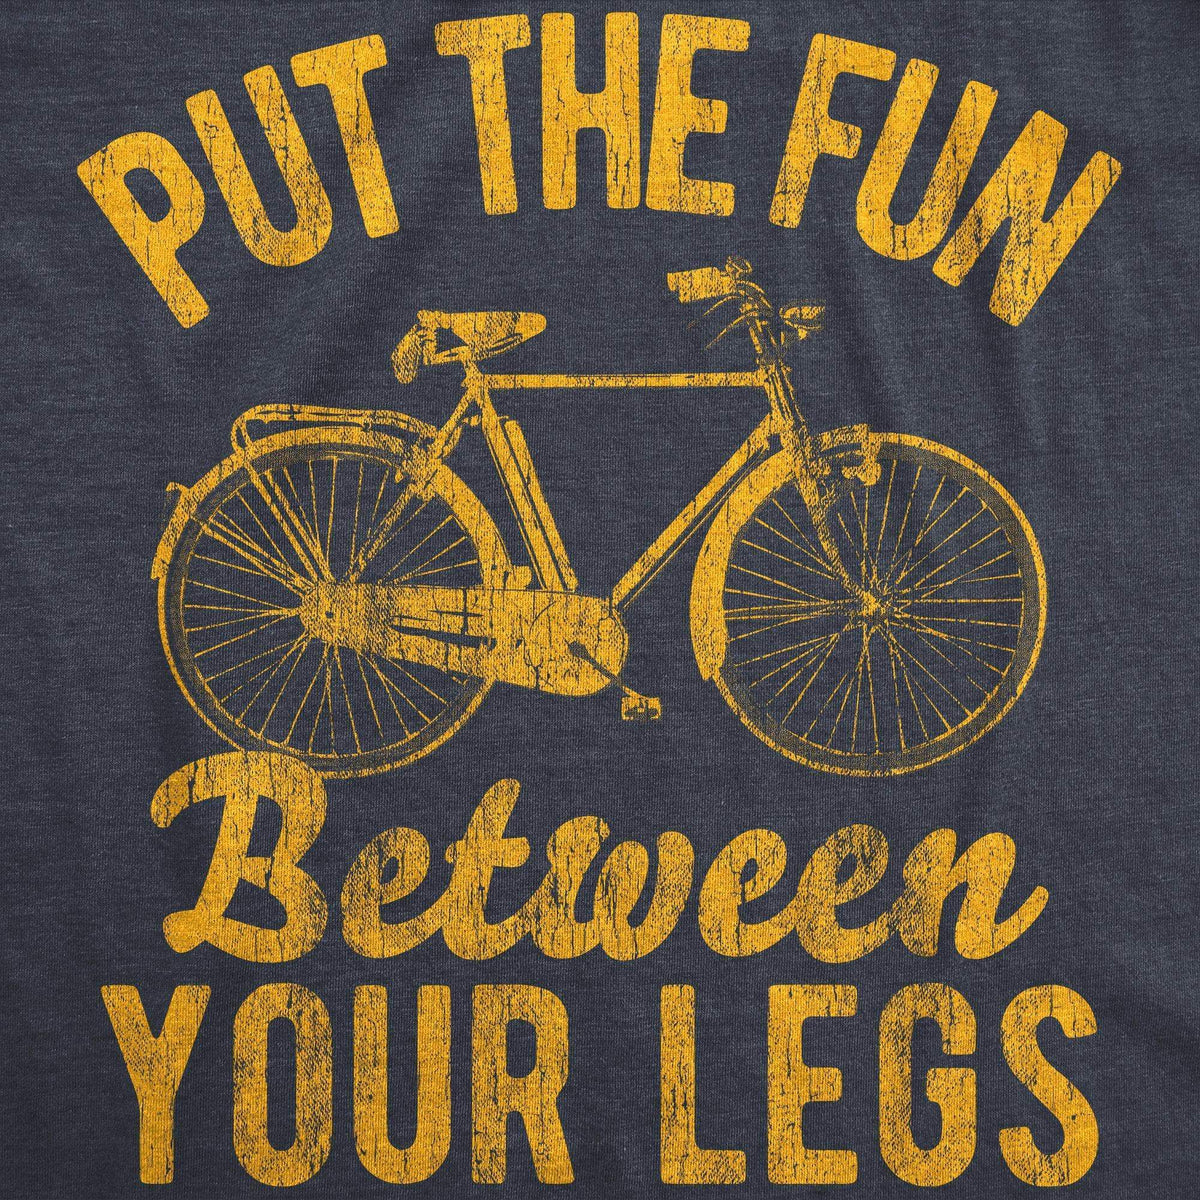 Put The Fun Between Your Legs Men&#39;s Tshirt - Crazy Dog T-Shirts